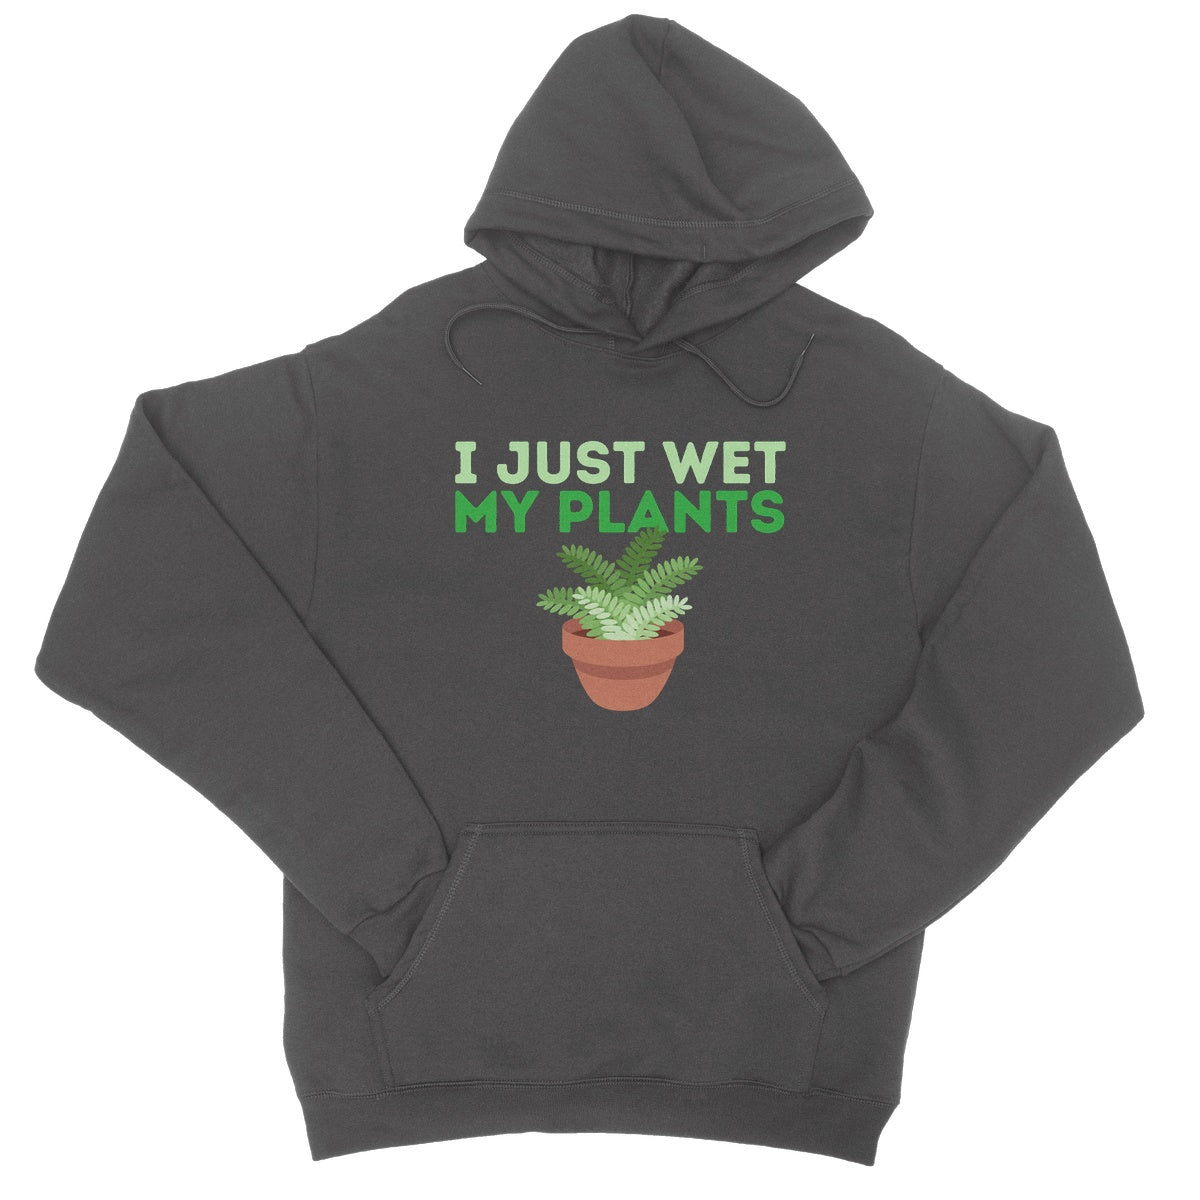 I just wet my plants hoodie grey